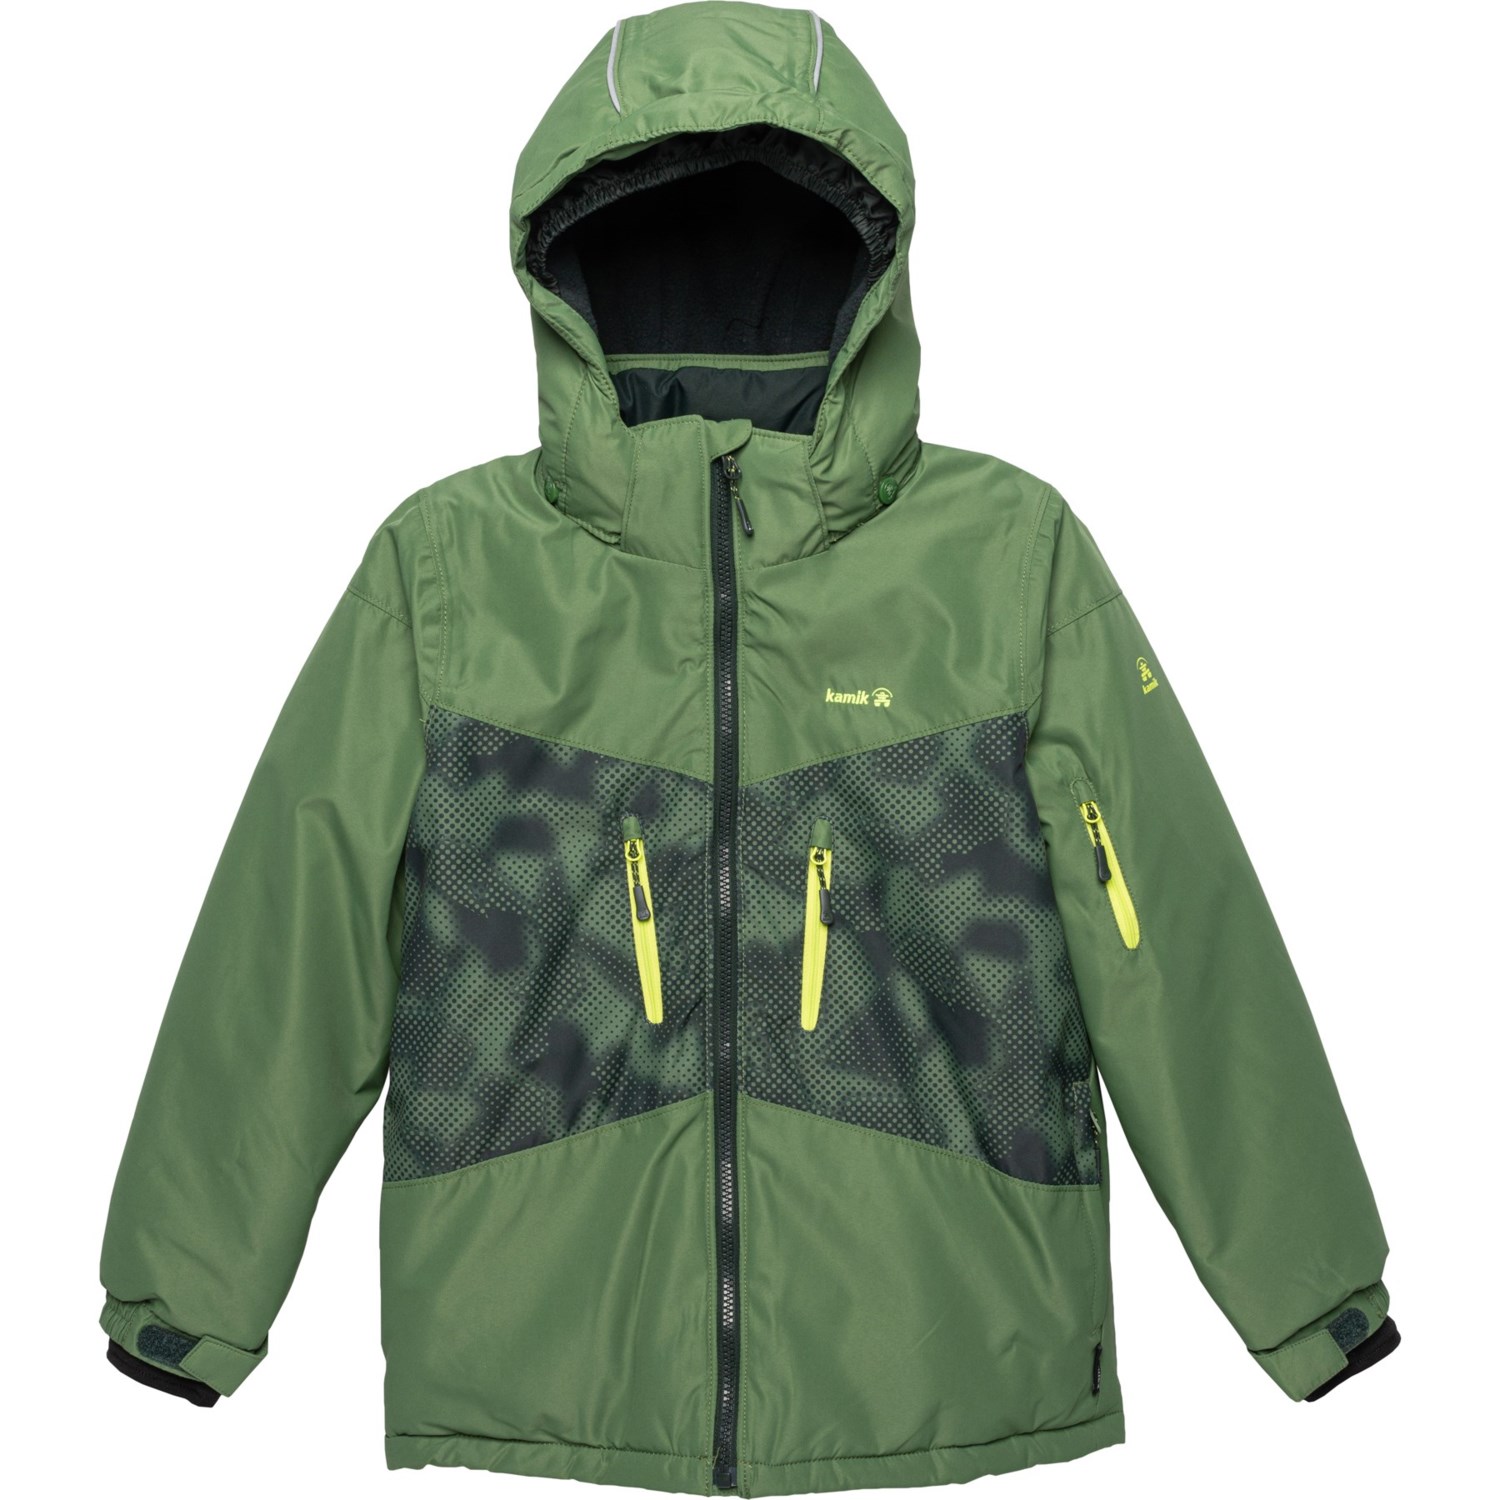 Boys Kamik Color-Block - Ski Jacket Insulated Save - Waterproof, Jared Big 65%